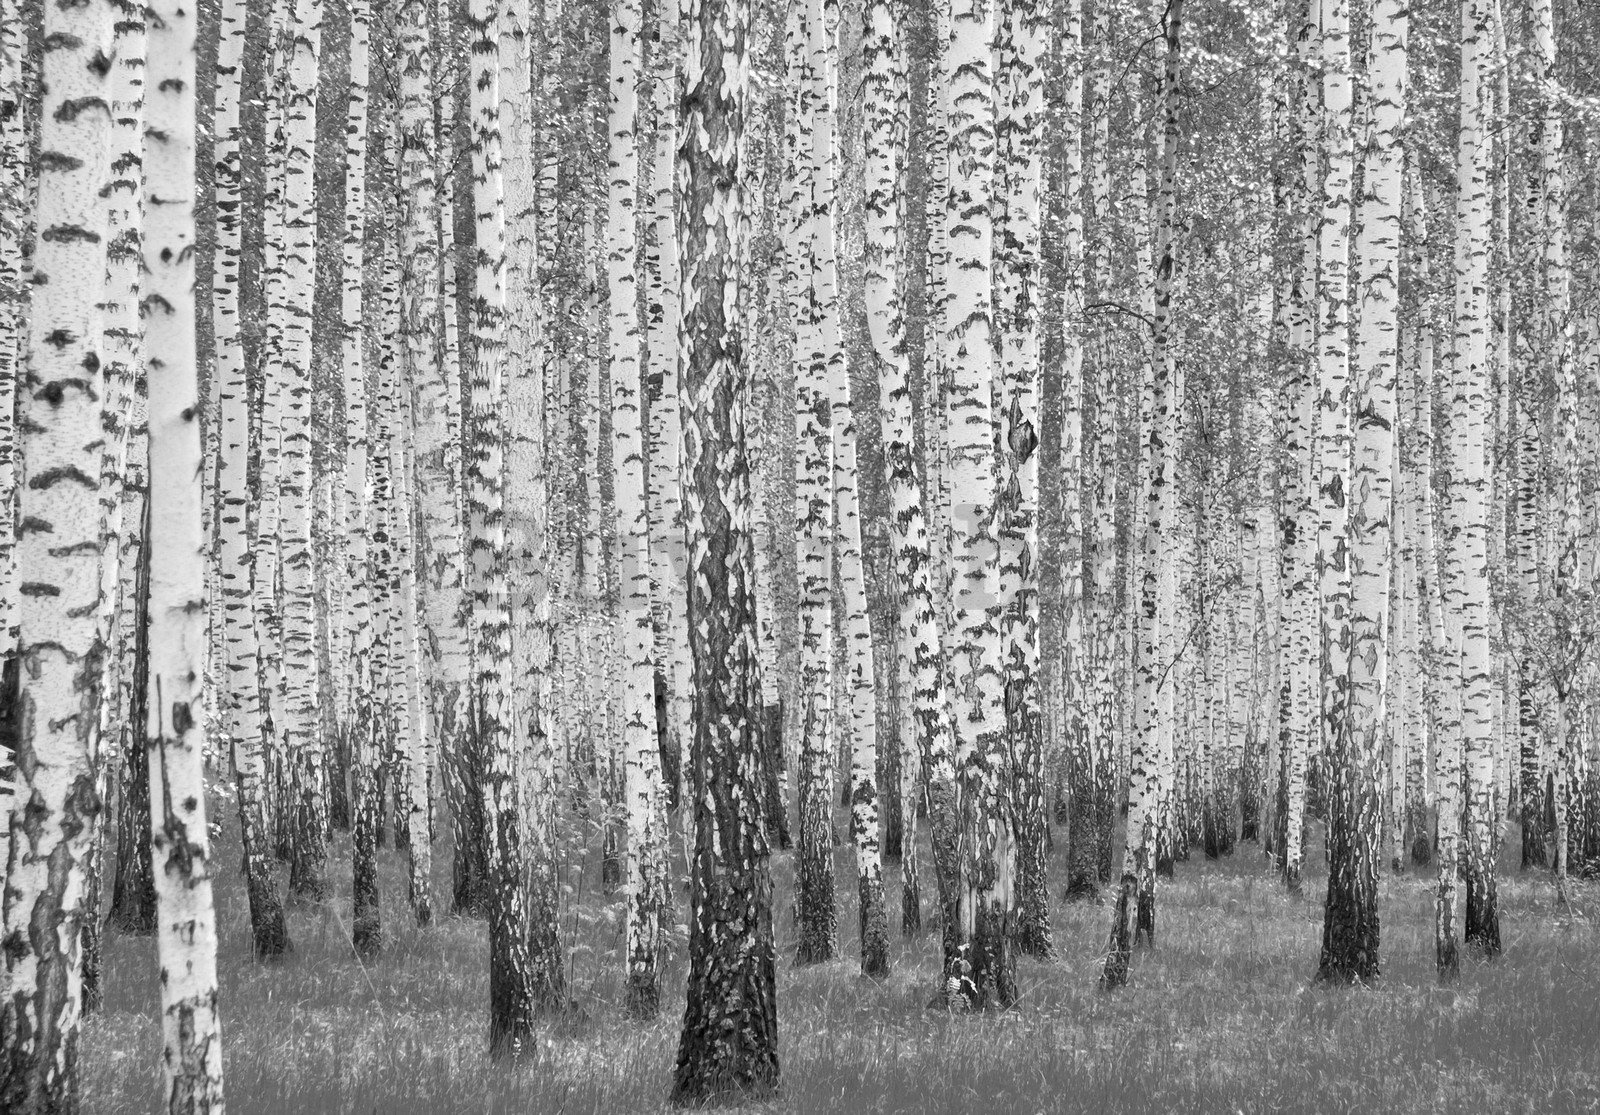 Vlies foto tapeta: Crno-bijele breze - 416x254 cm